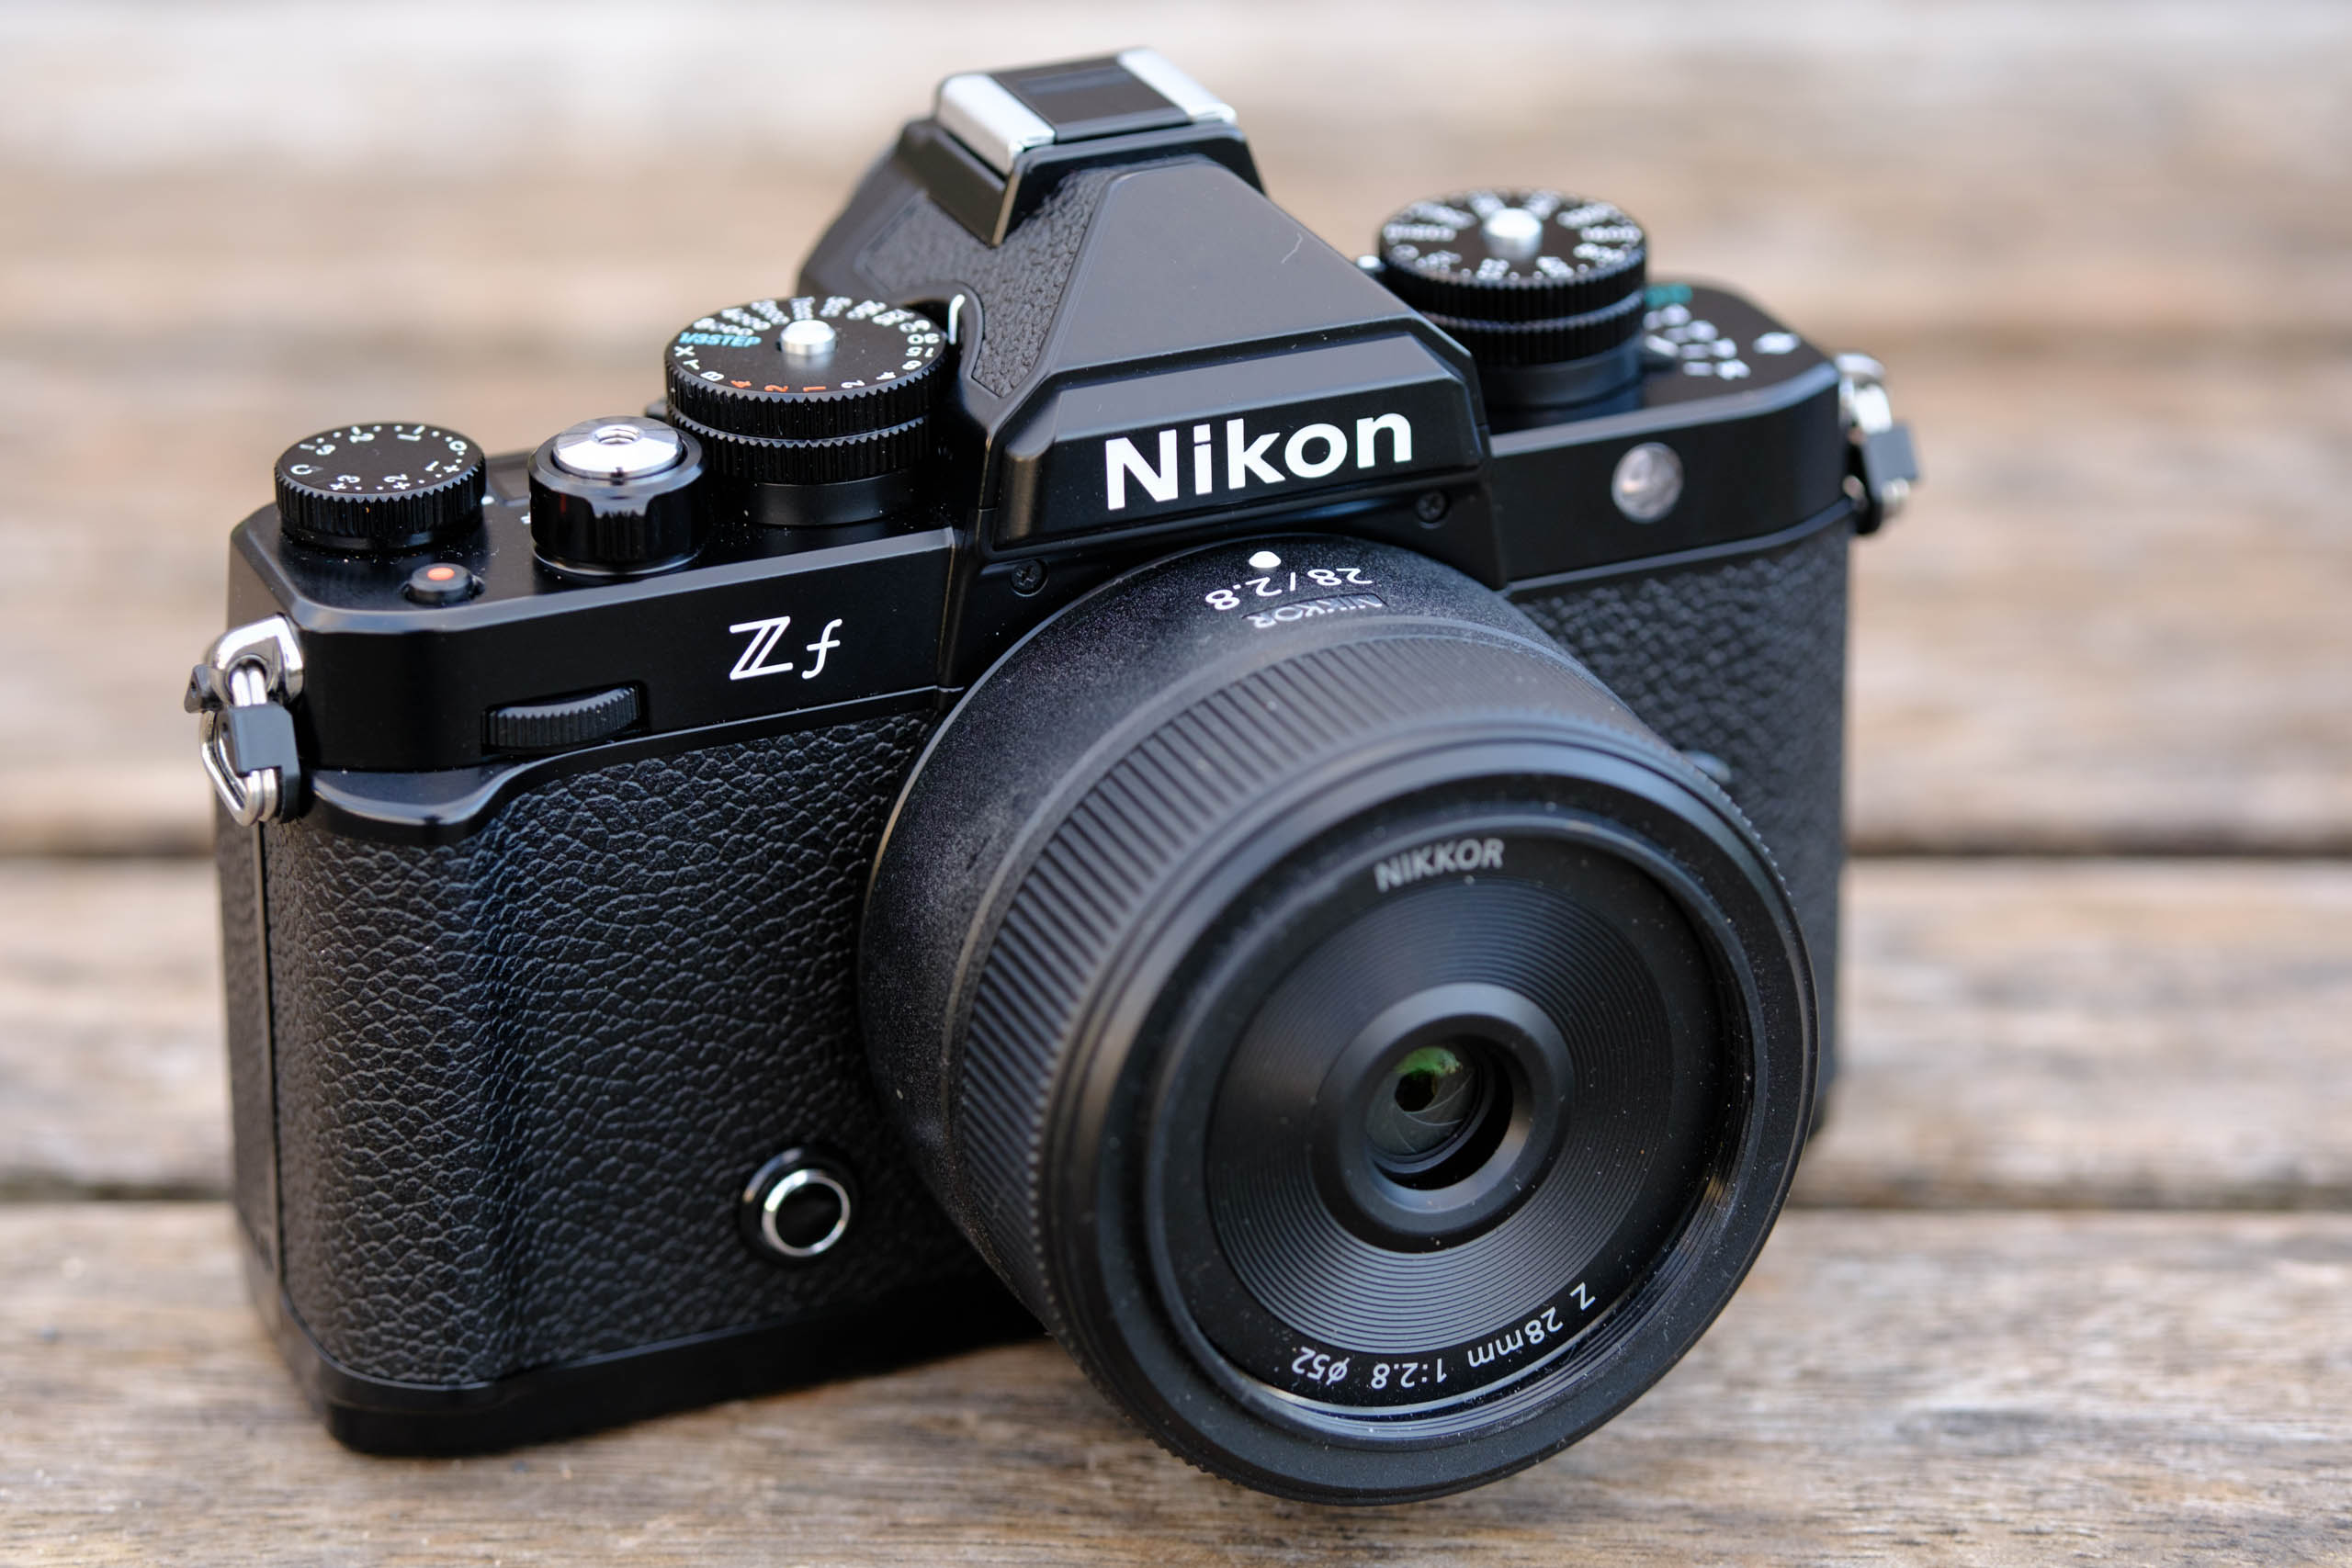 Nikon Zf vs Zfc - The 10 Main Differences - Mirrorless Comparison